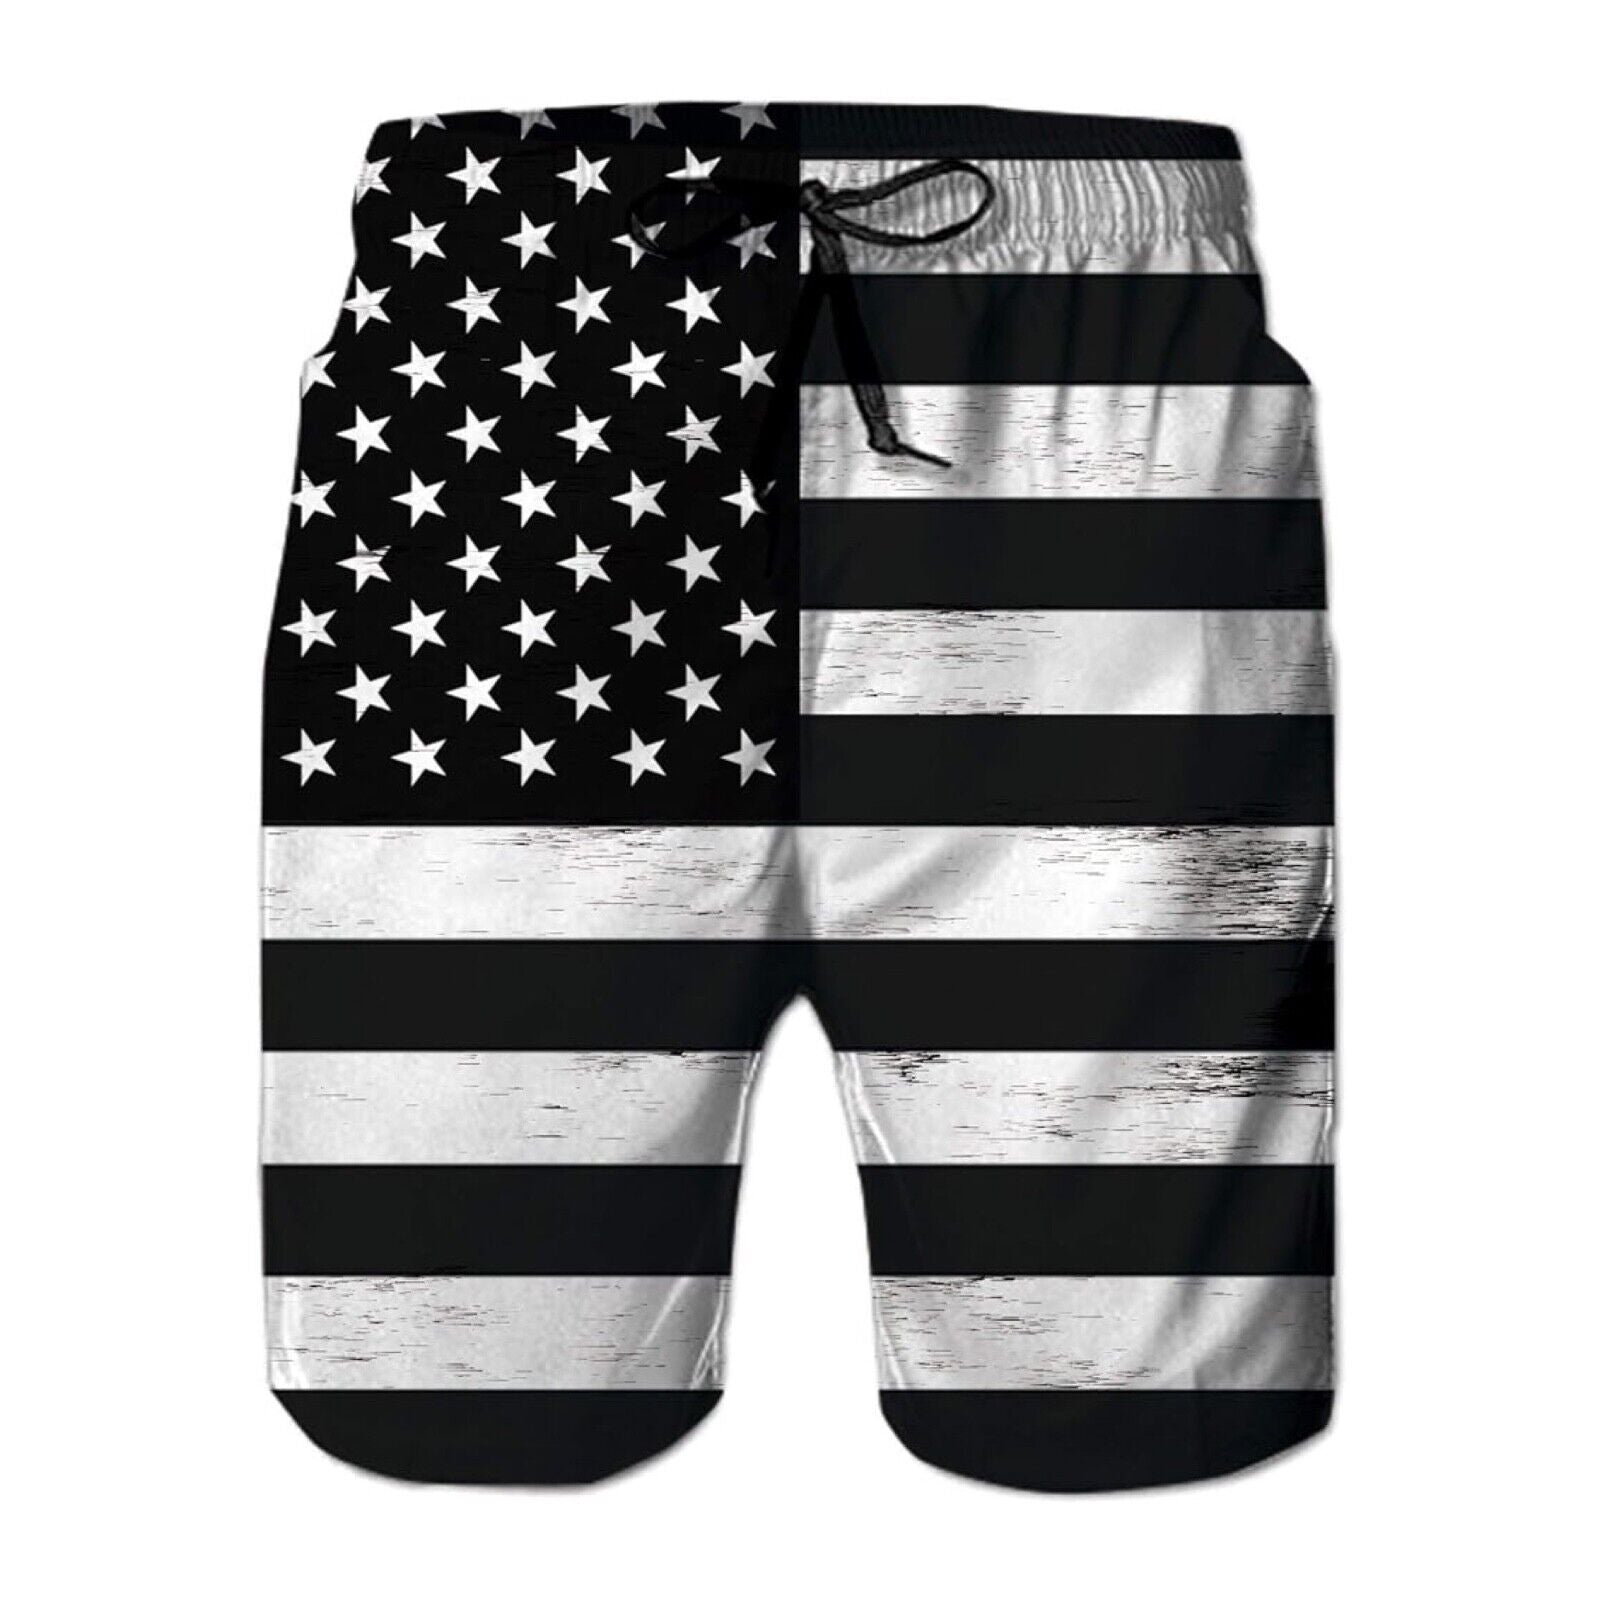 Men's Swim Trunks, Patriotic, Quick Dry, Board Short - Black with White US Flag